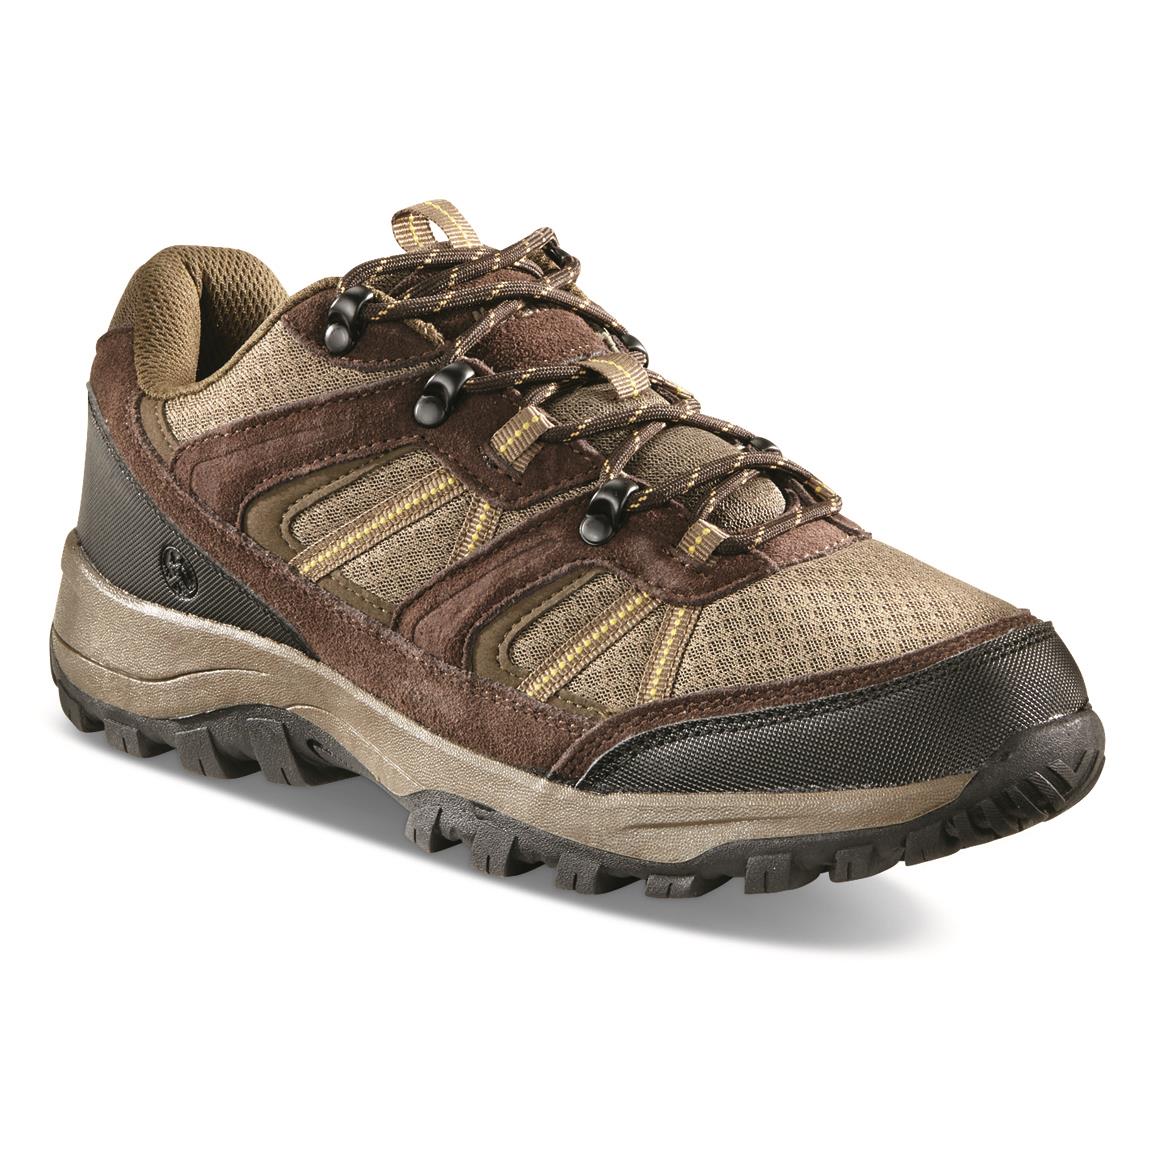 Northside Men's Arlow Canyon Low Hiking Shoes, Dark Brown